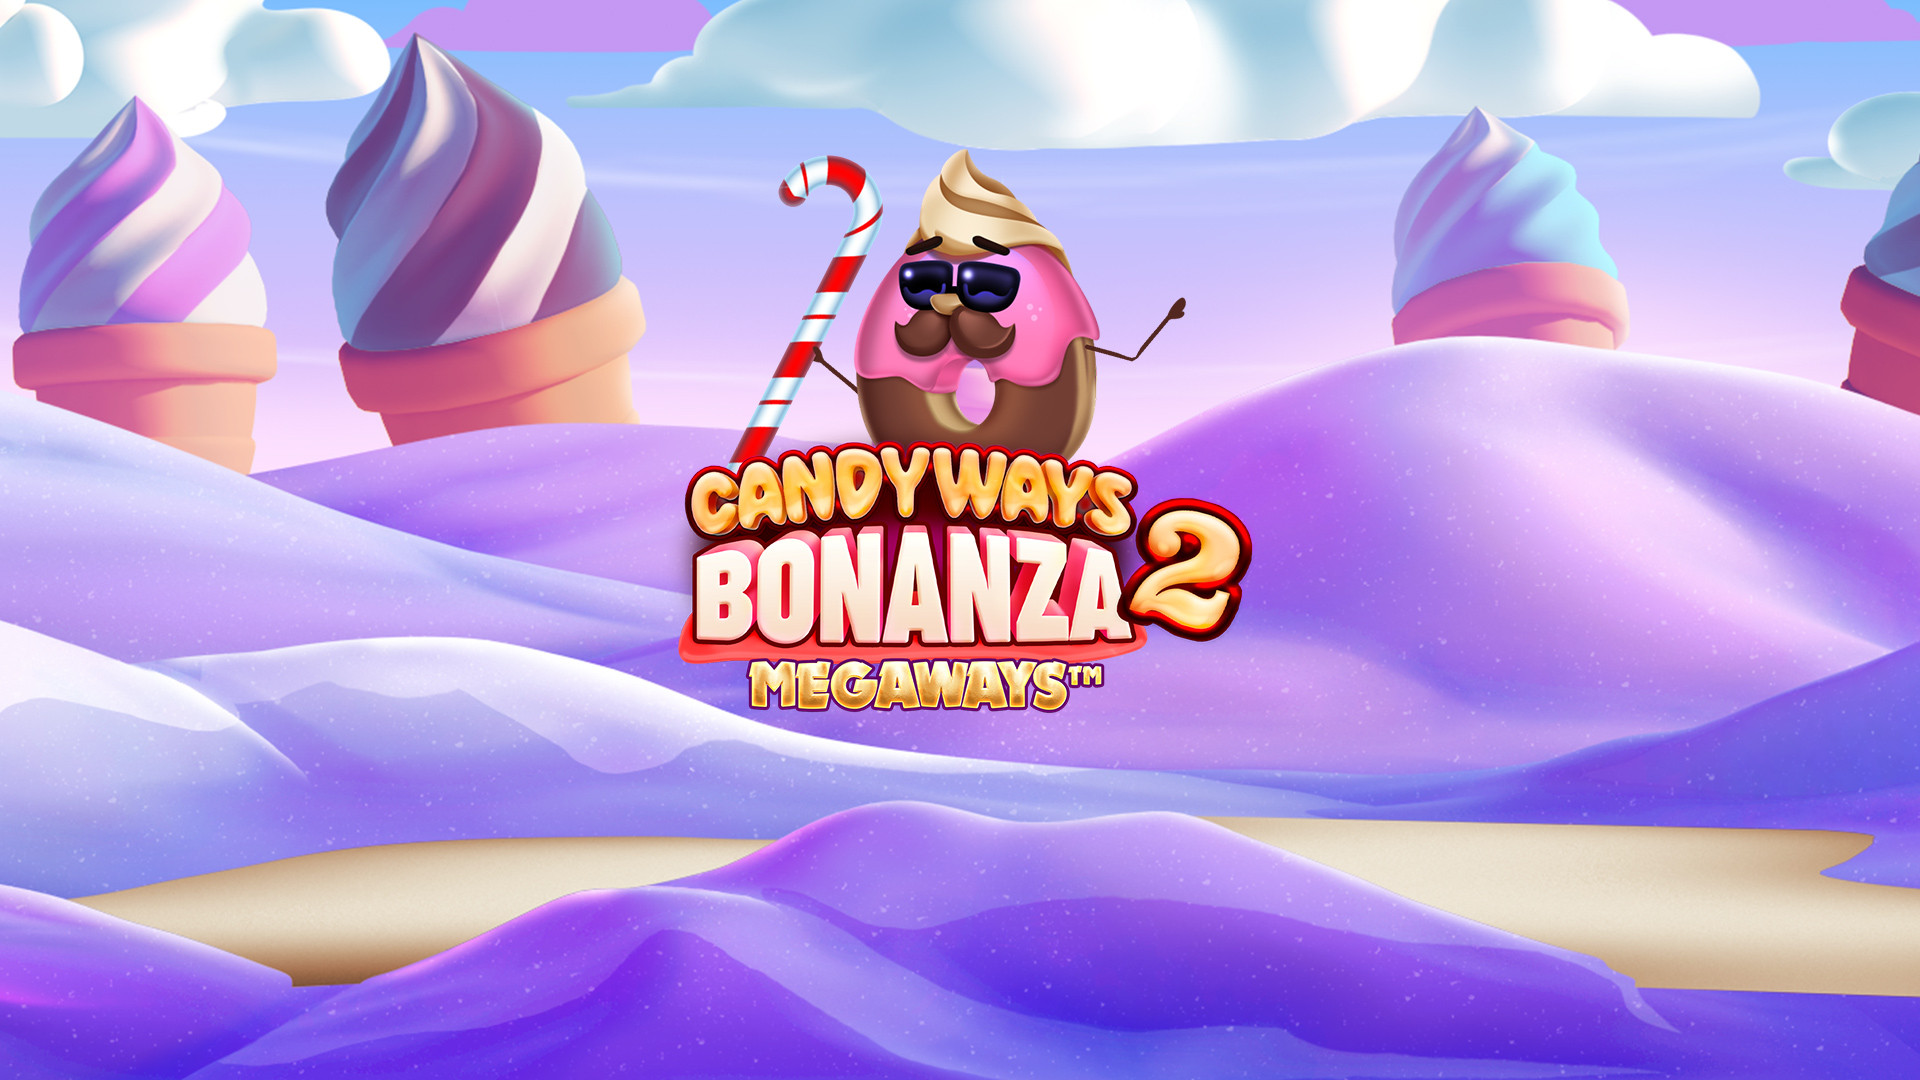 Candyways Bonanza 2 MEGAWAYS